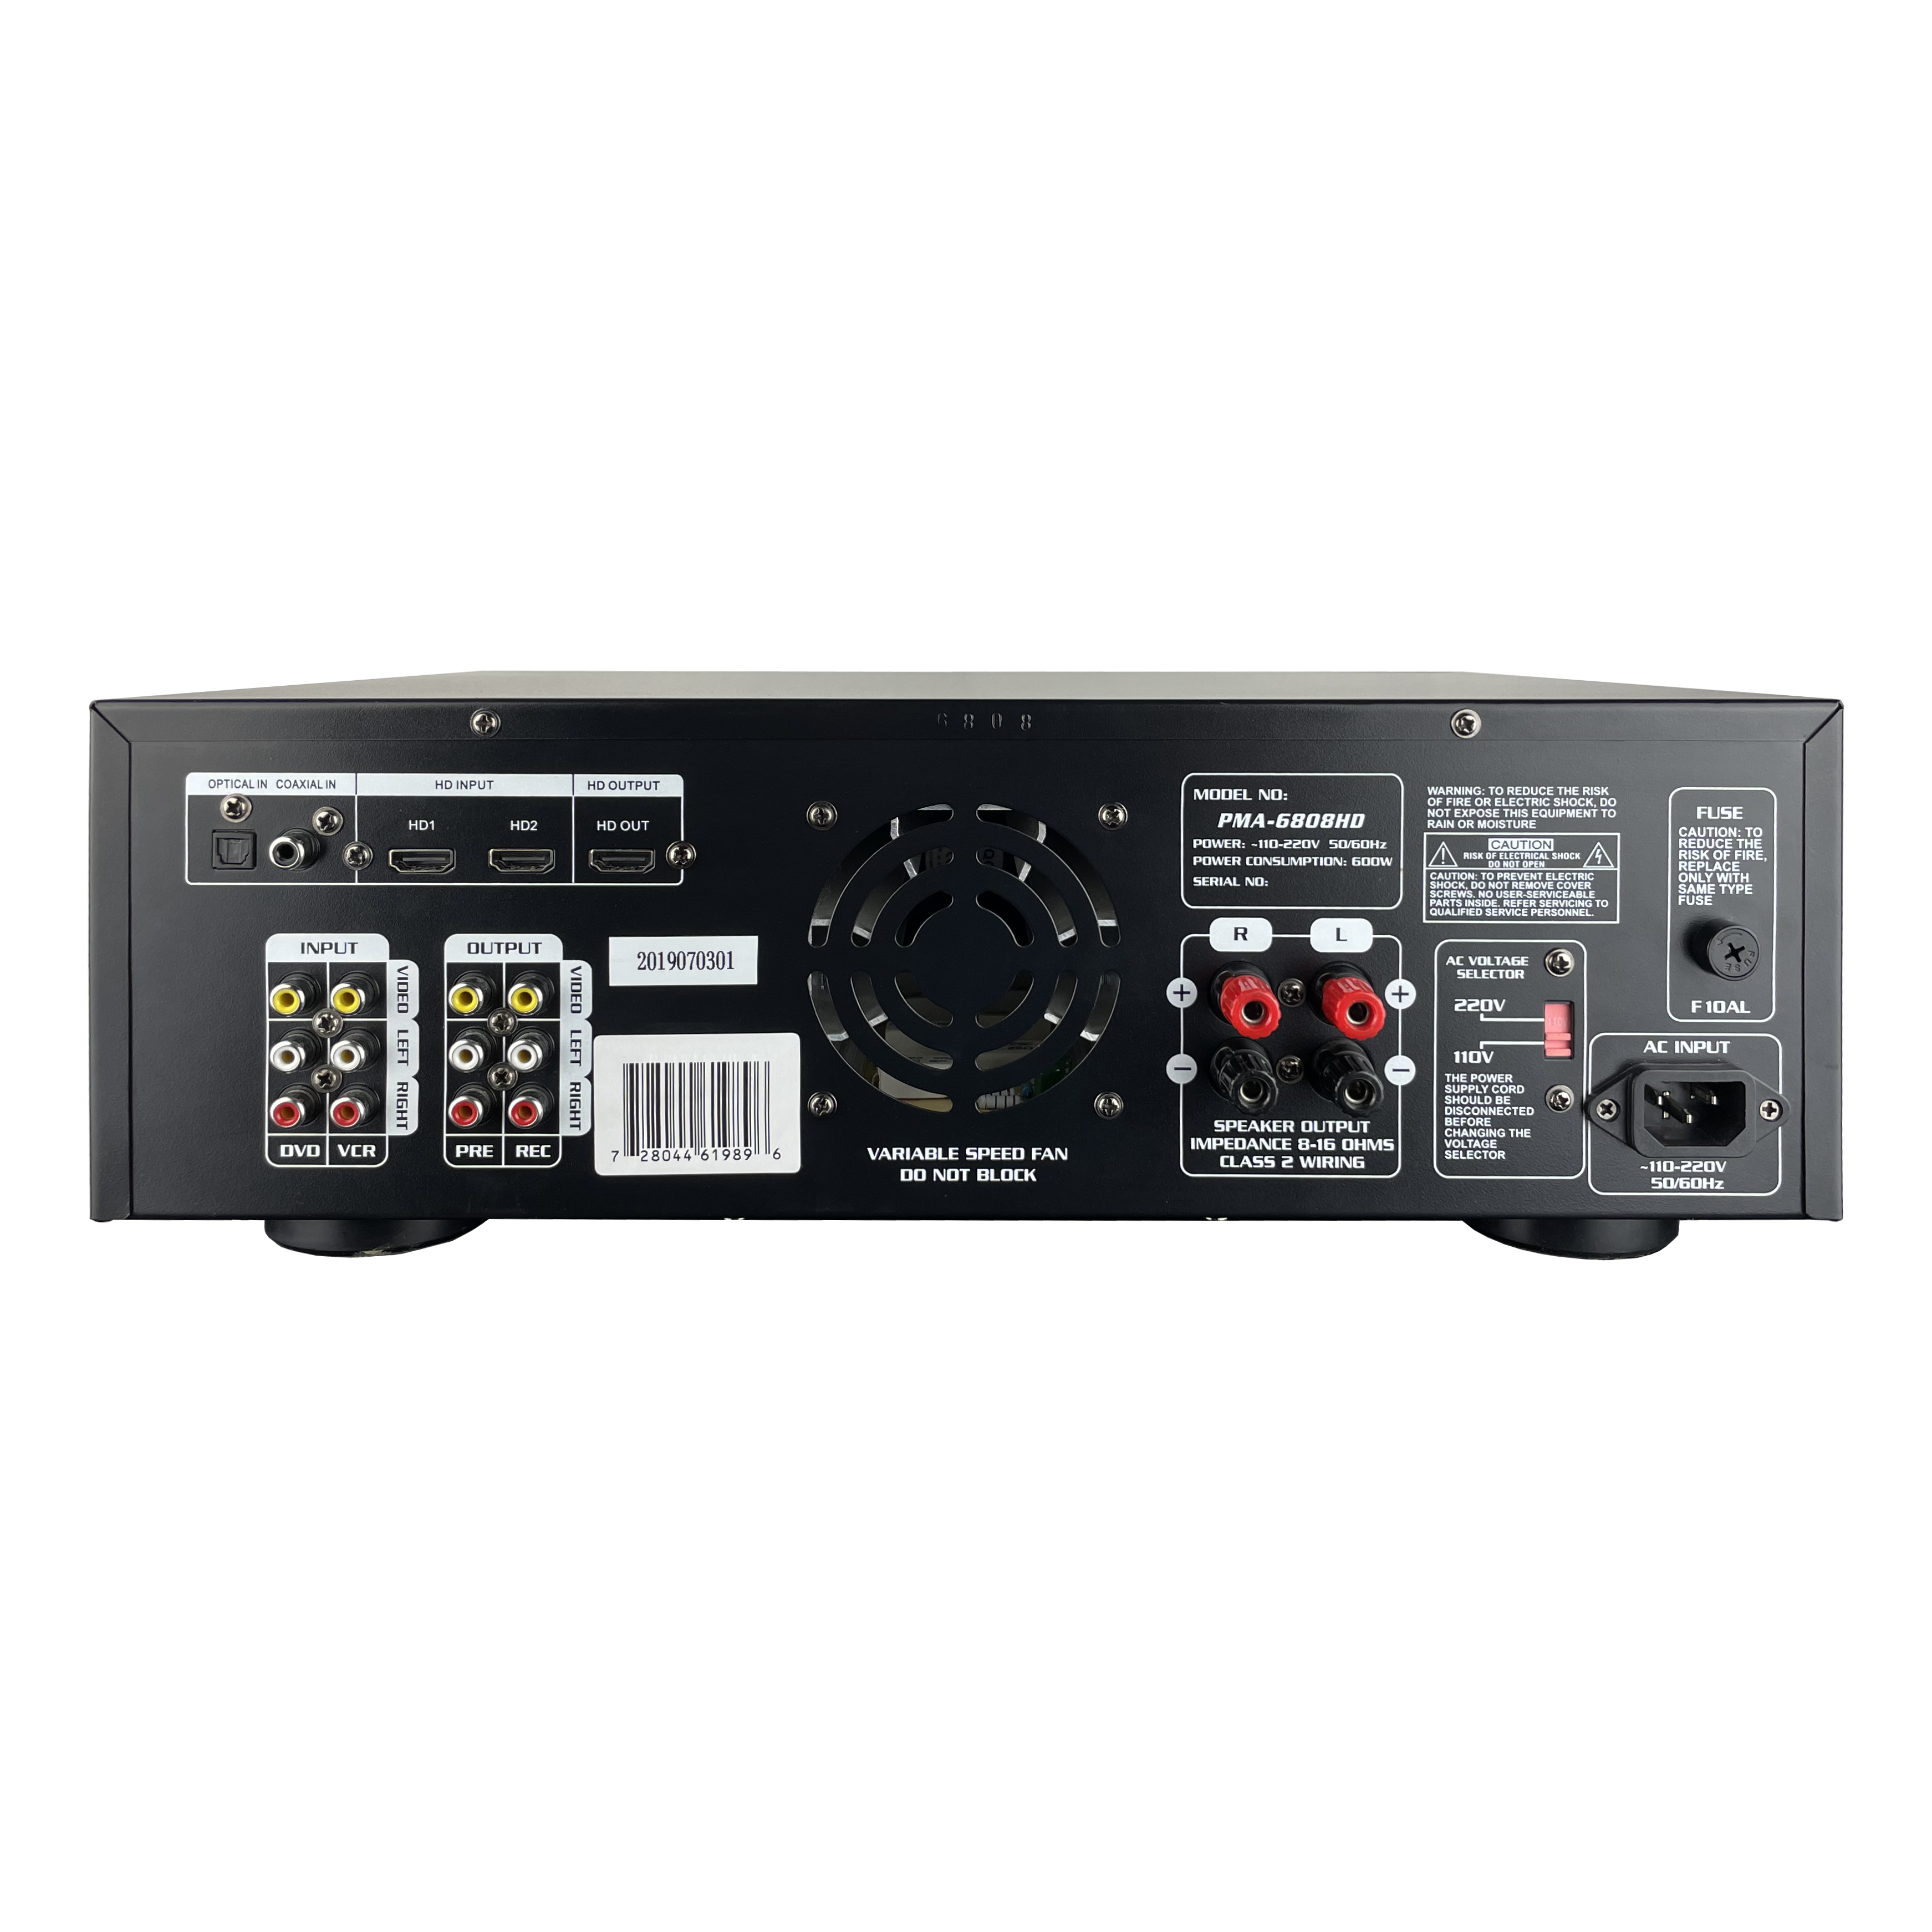 ImPro PMA-6808HD 600W Mixing Amplifier Bundle with ImPro UHF-77 Wireless Microphones